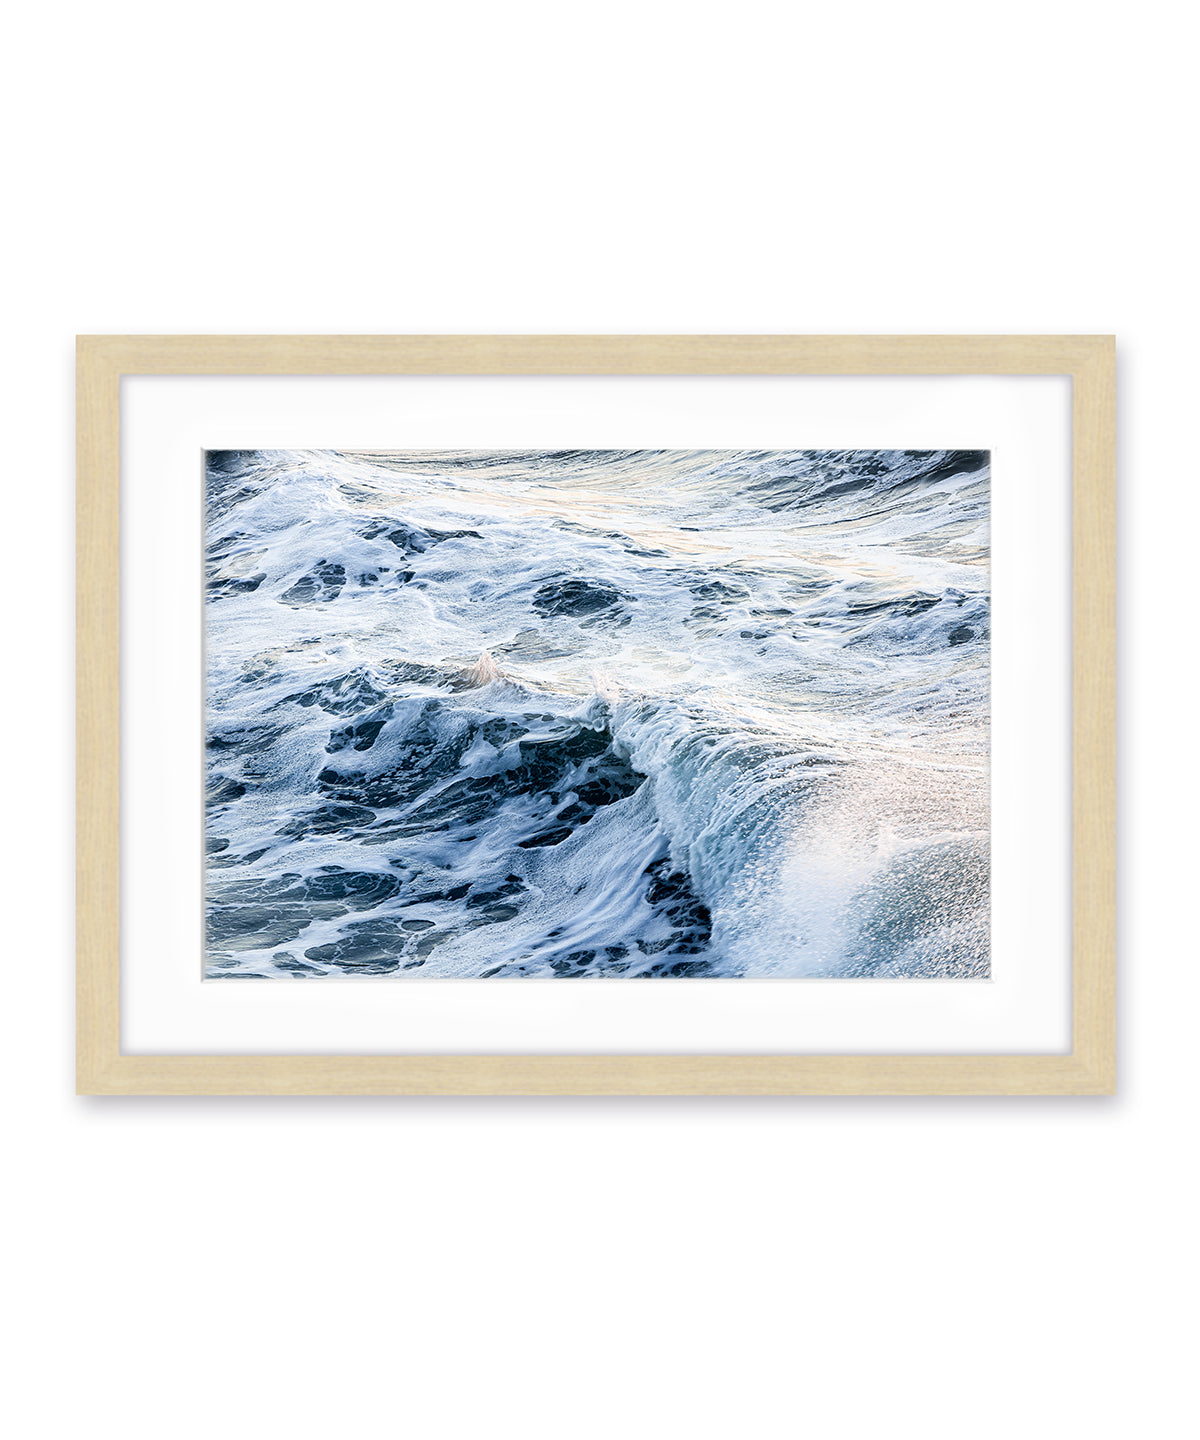 textured indigo ocean photograph with wood frame